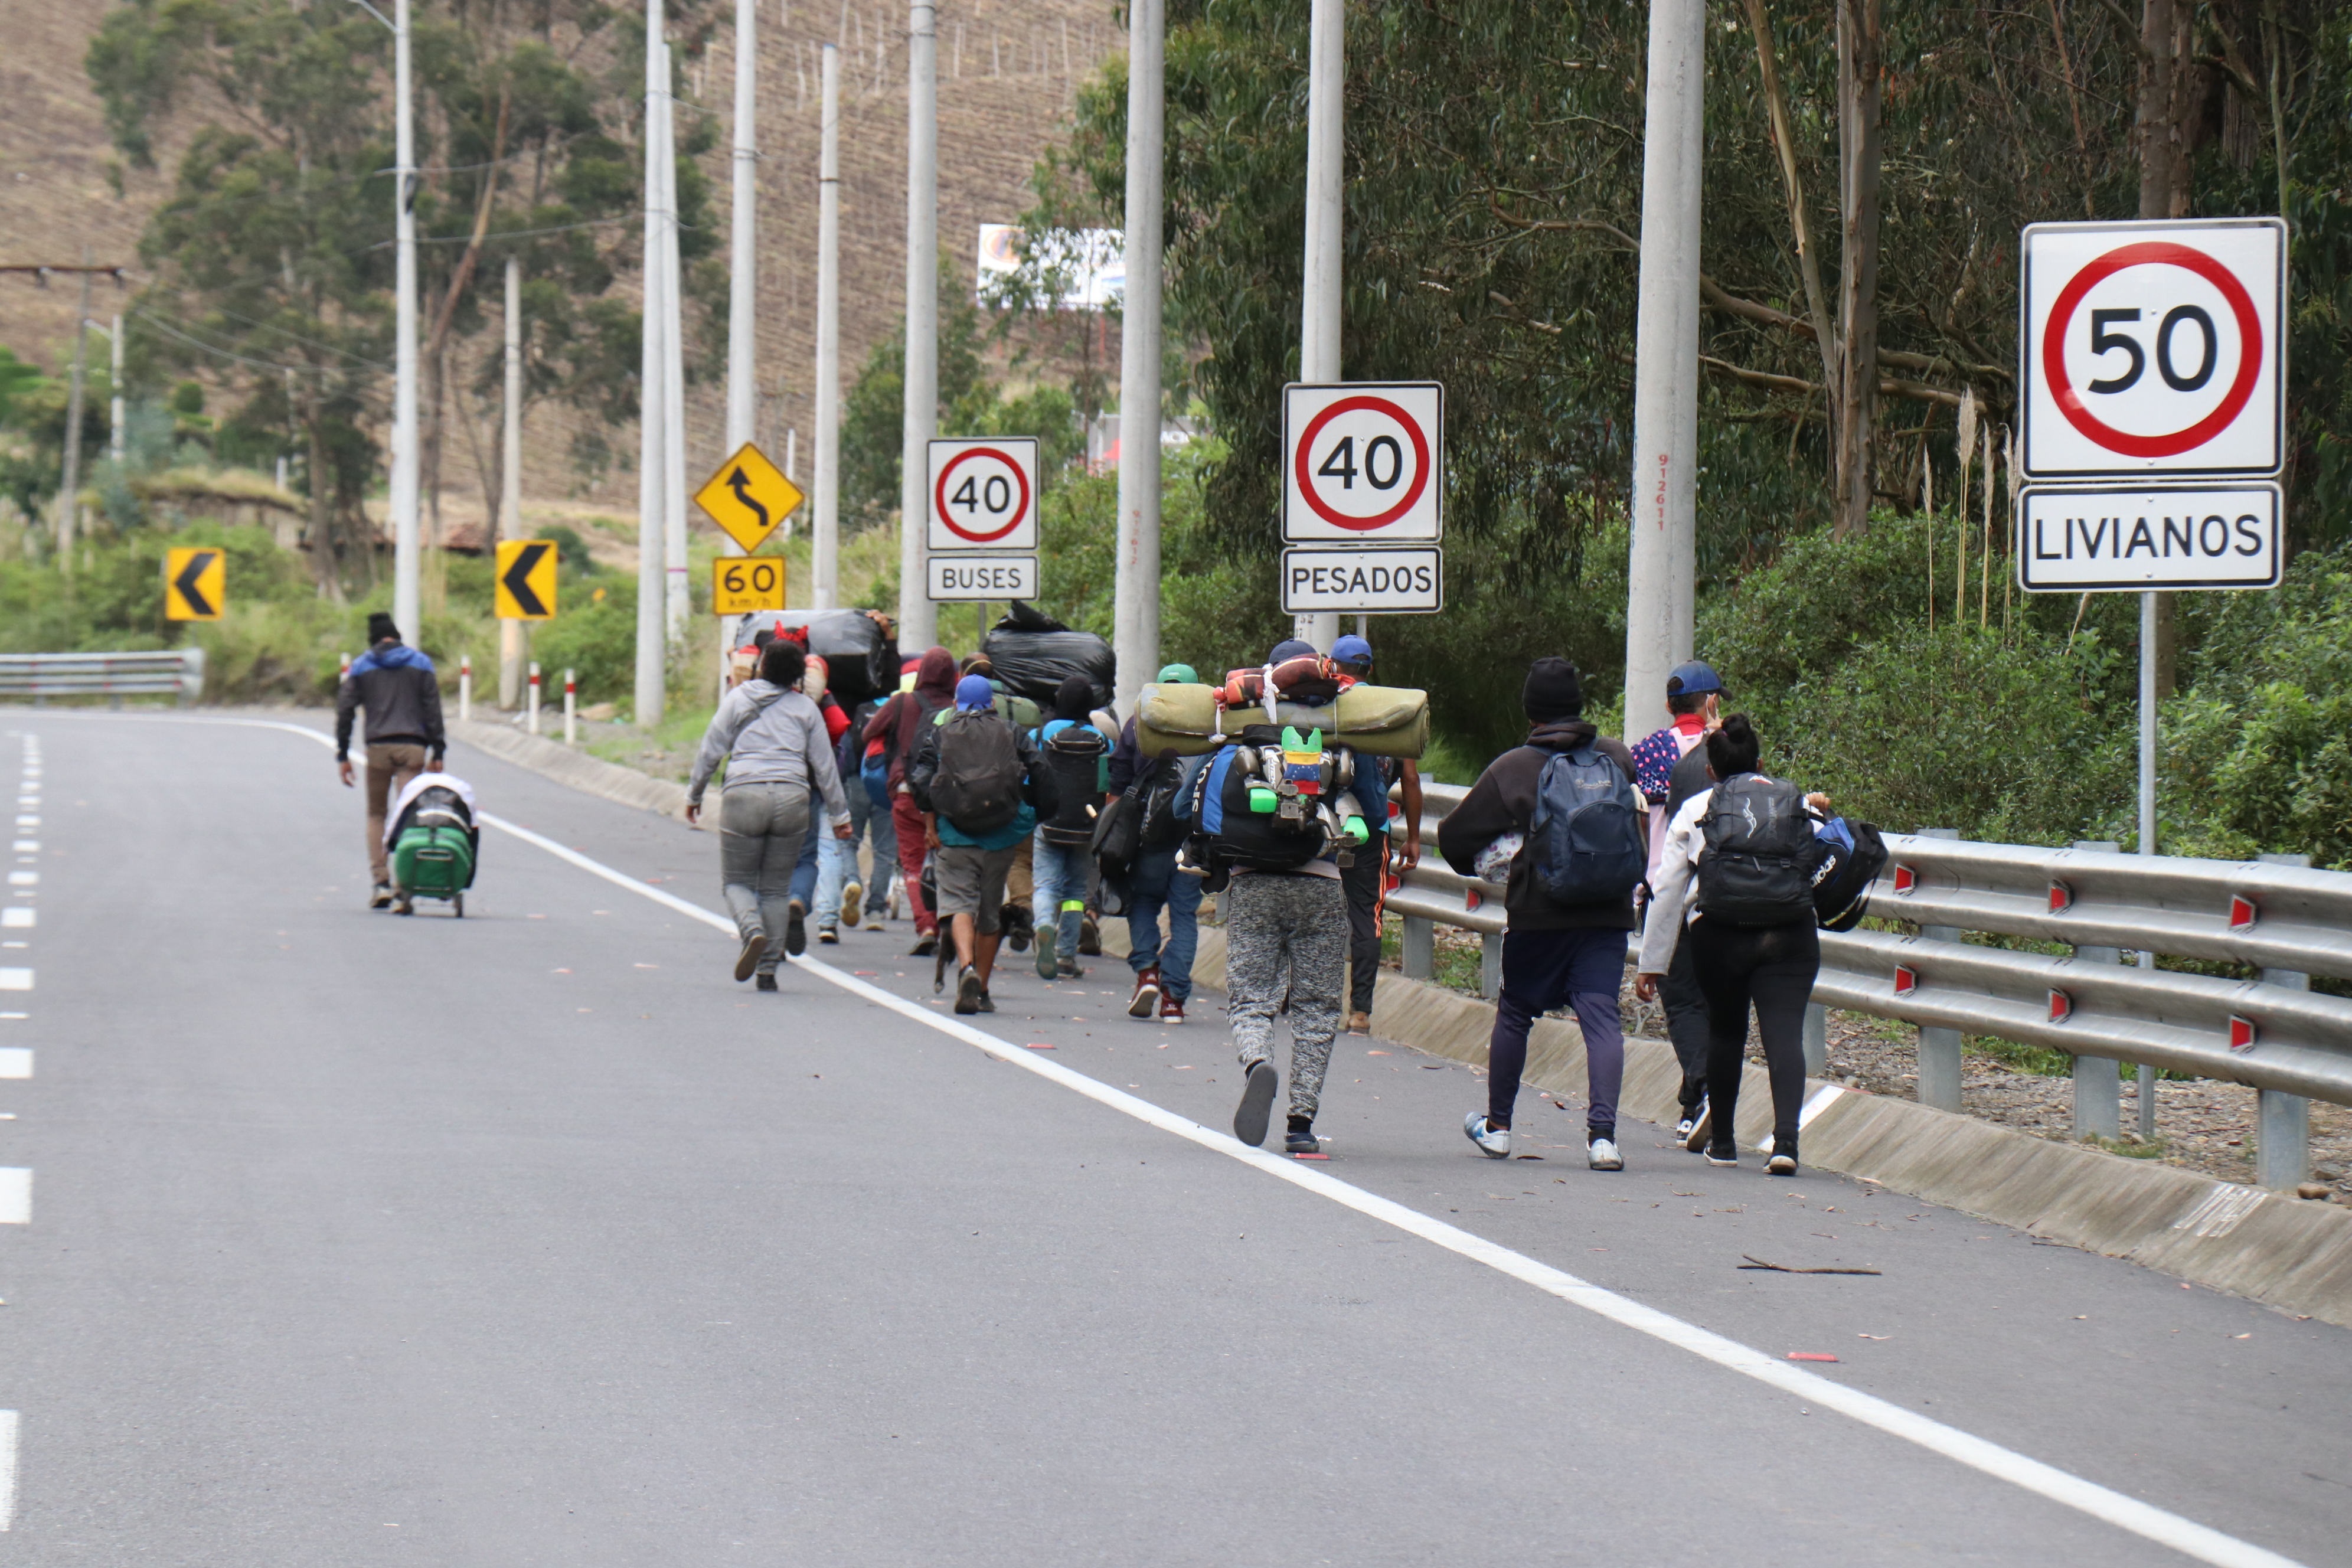 Venezuelans once again fleeing on foot as troubles mount